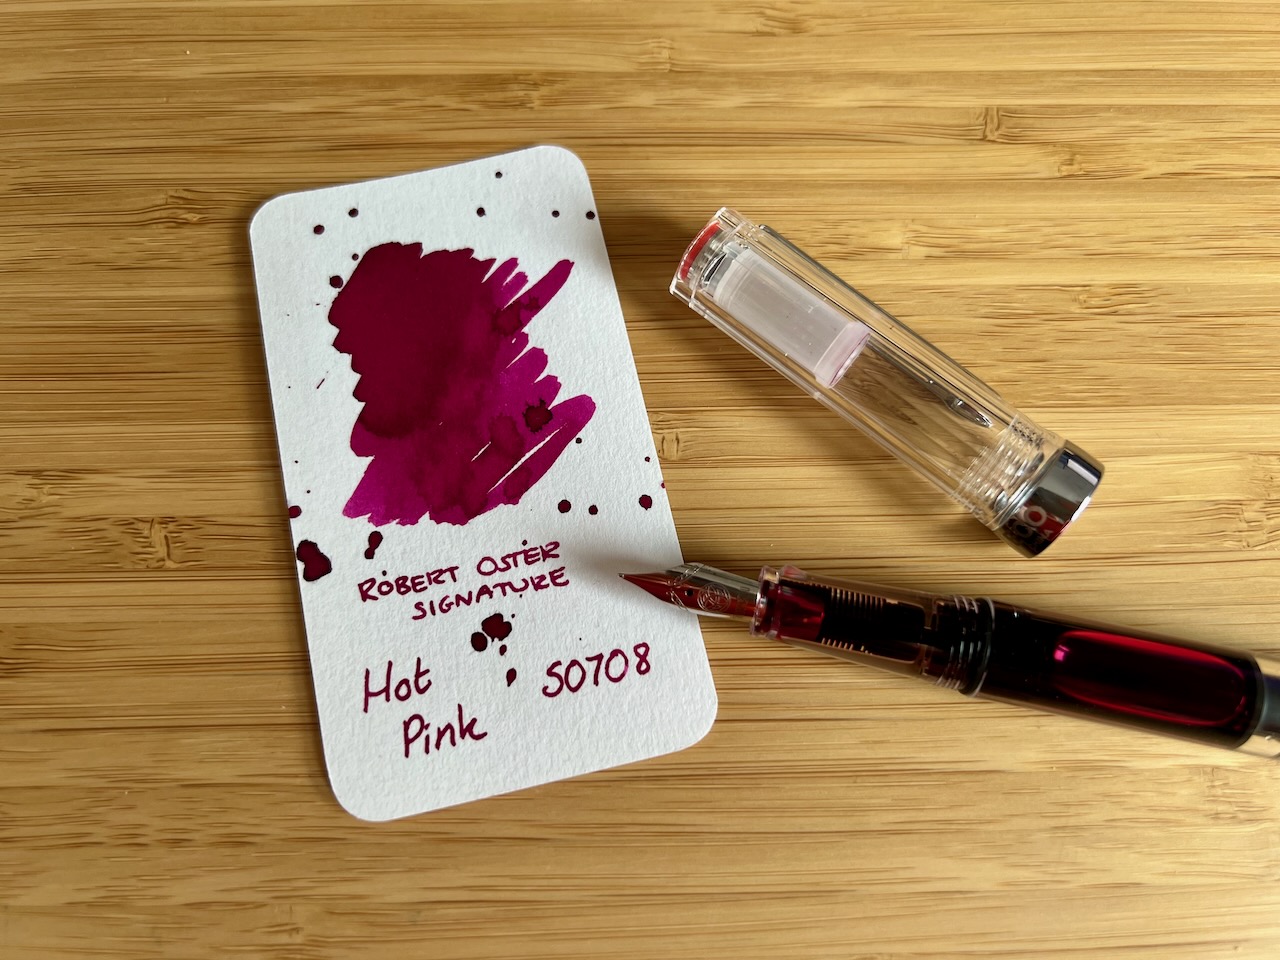 TWSBI Eco with Robert Oster Signature Hot Pink ink